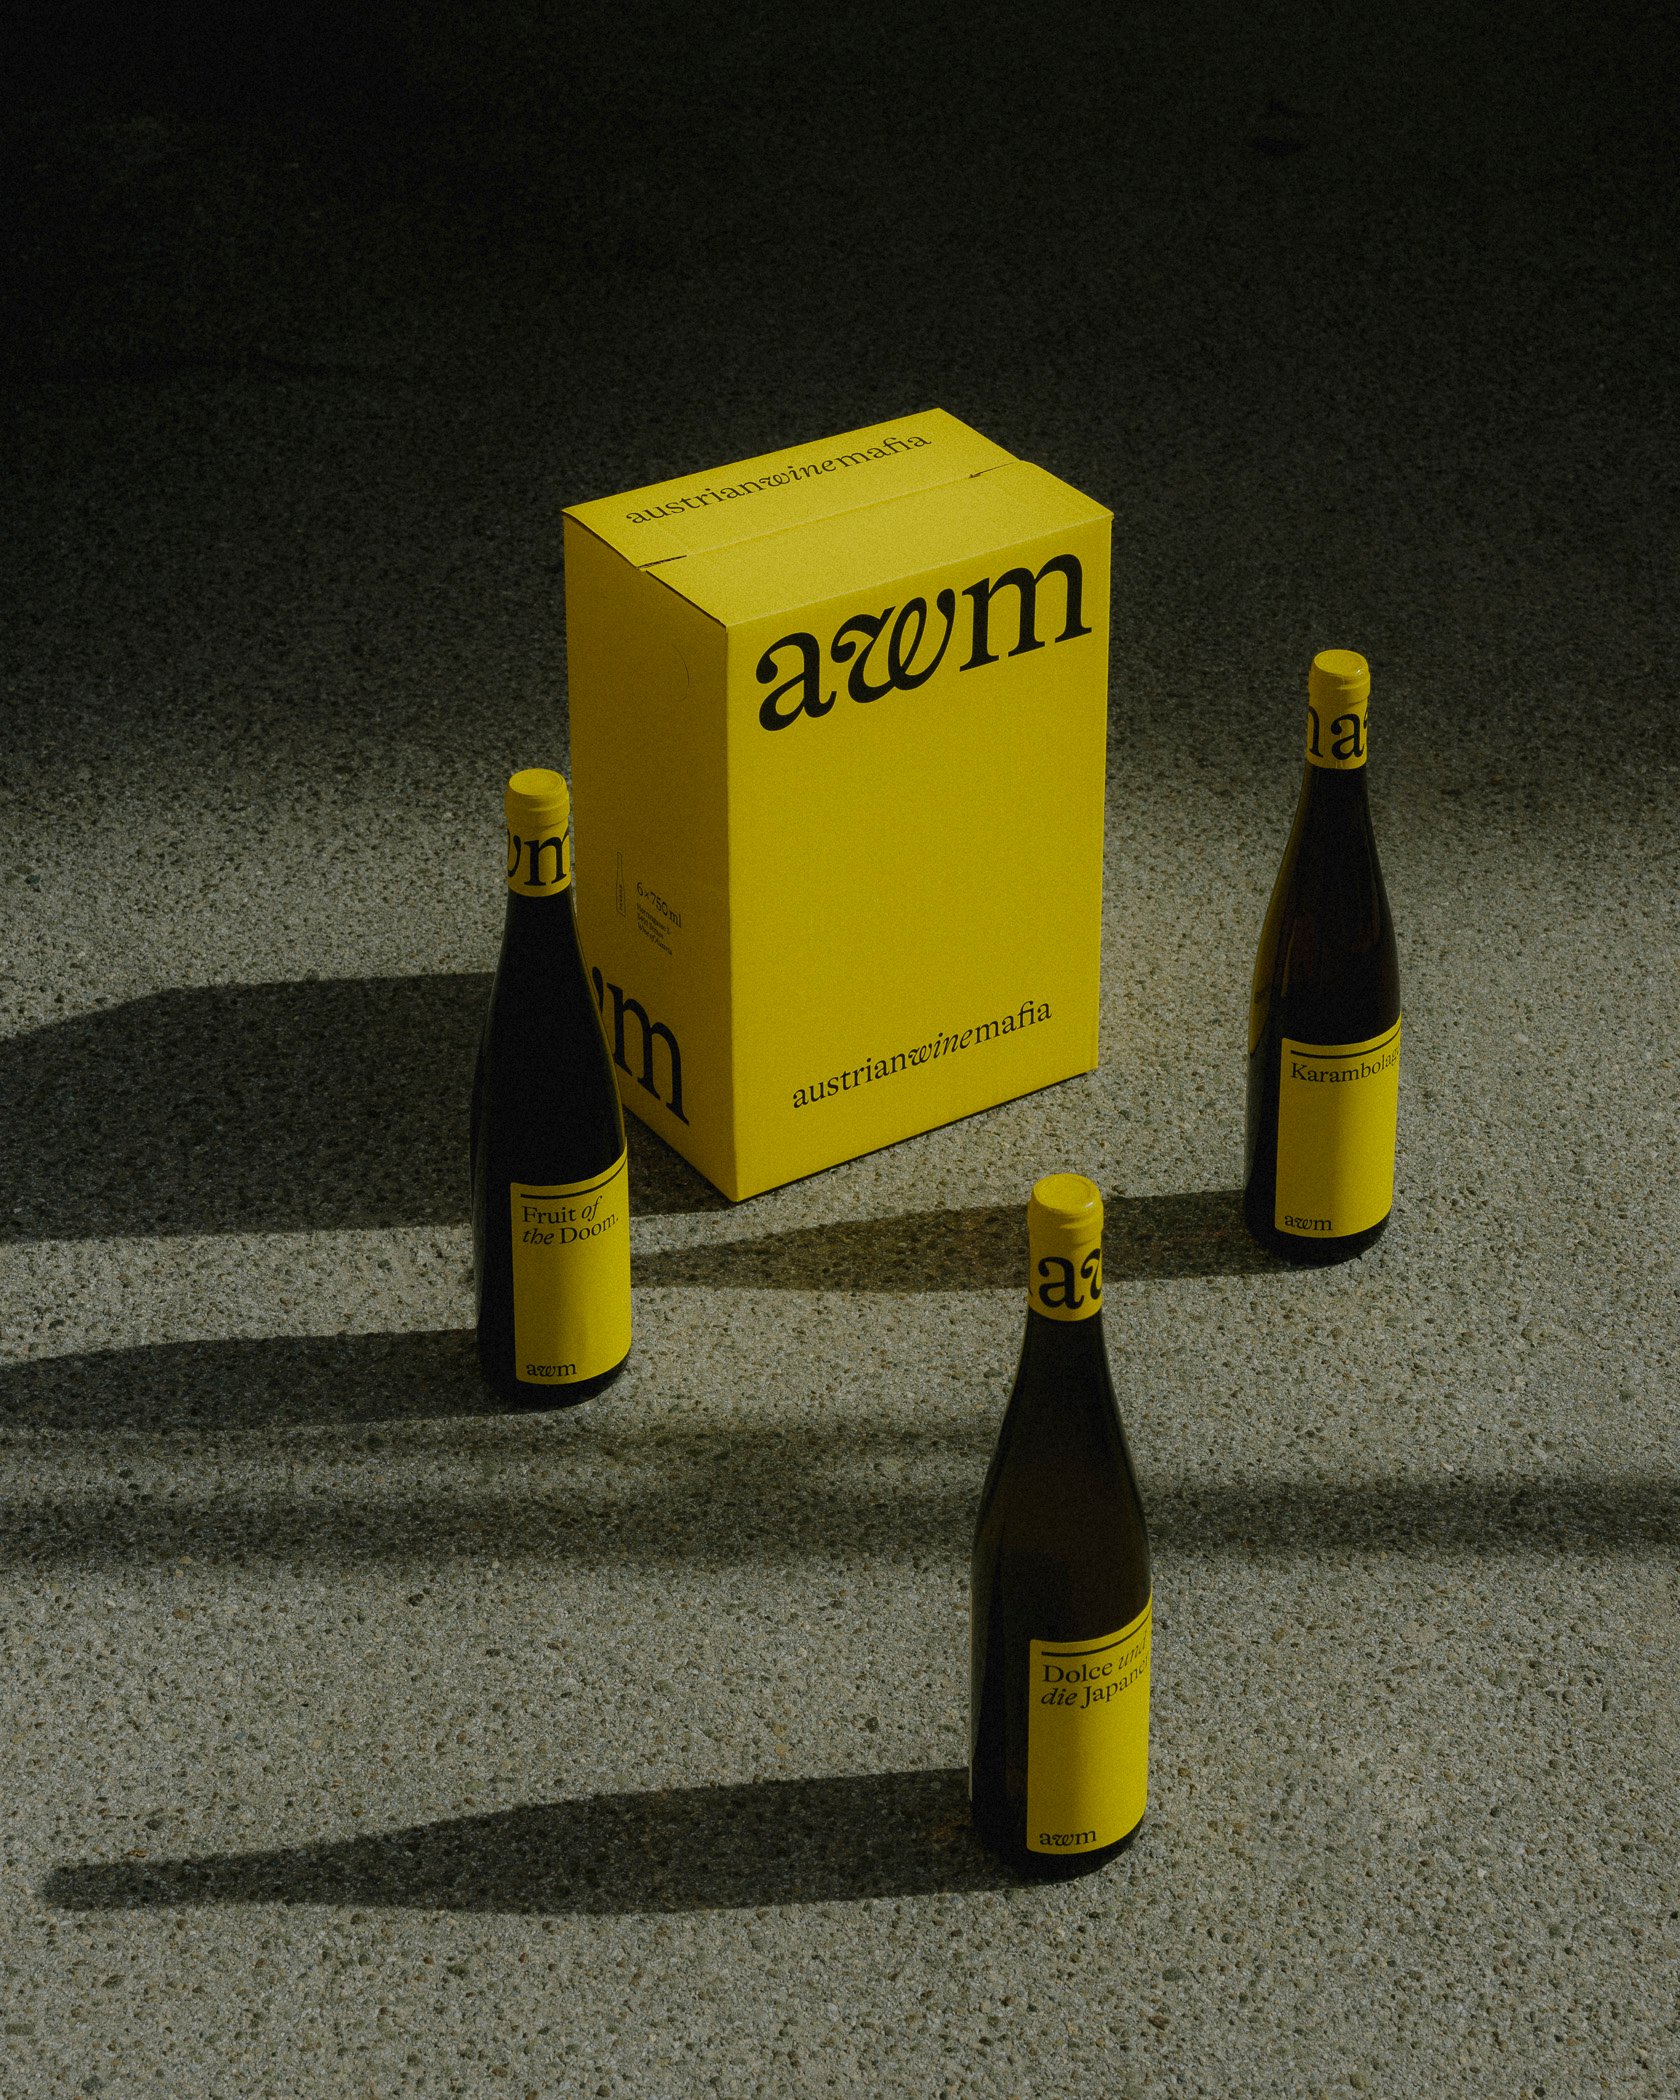 Austrian Wine Mafia’s Sunny Design is More Inspired by Literature Than Crime